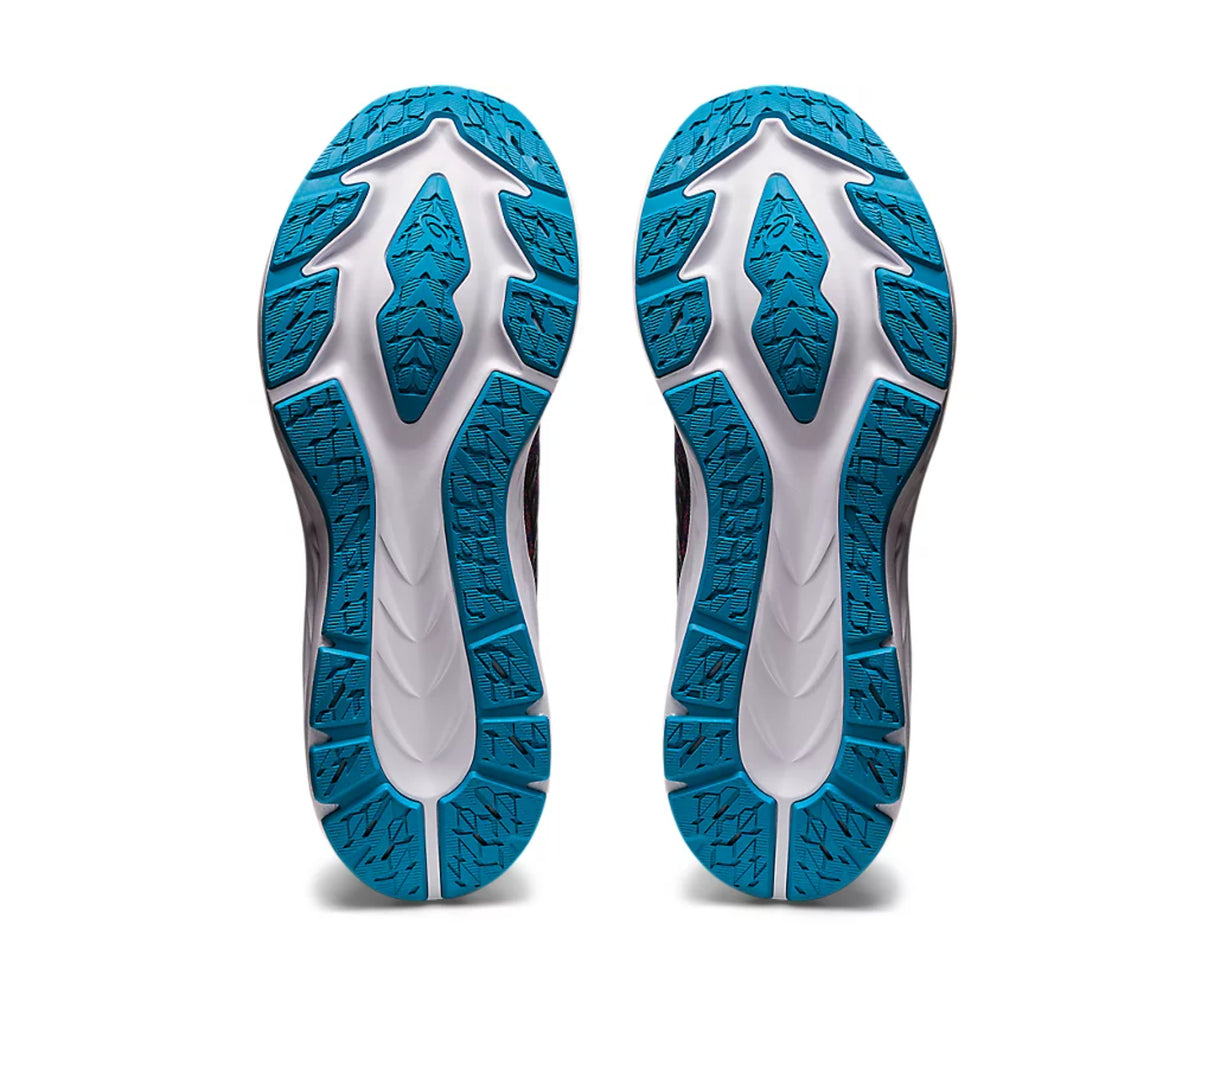 Asics DYNABLAST 3 Sports Running Shoes Indigo Blue/Black 1011B460